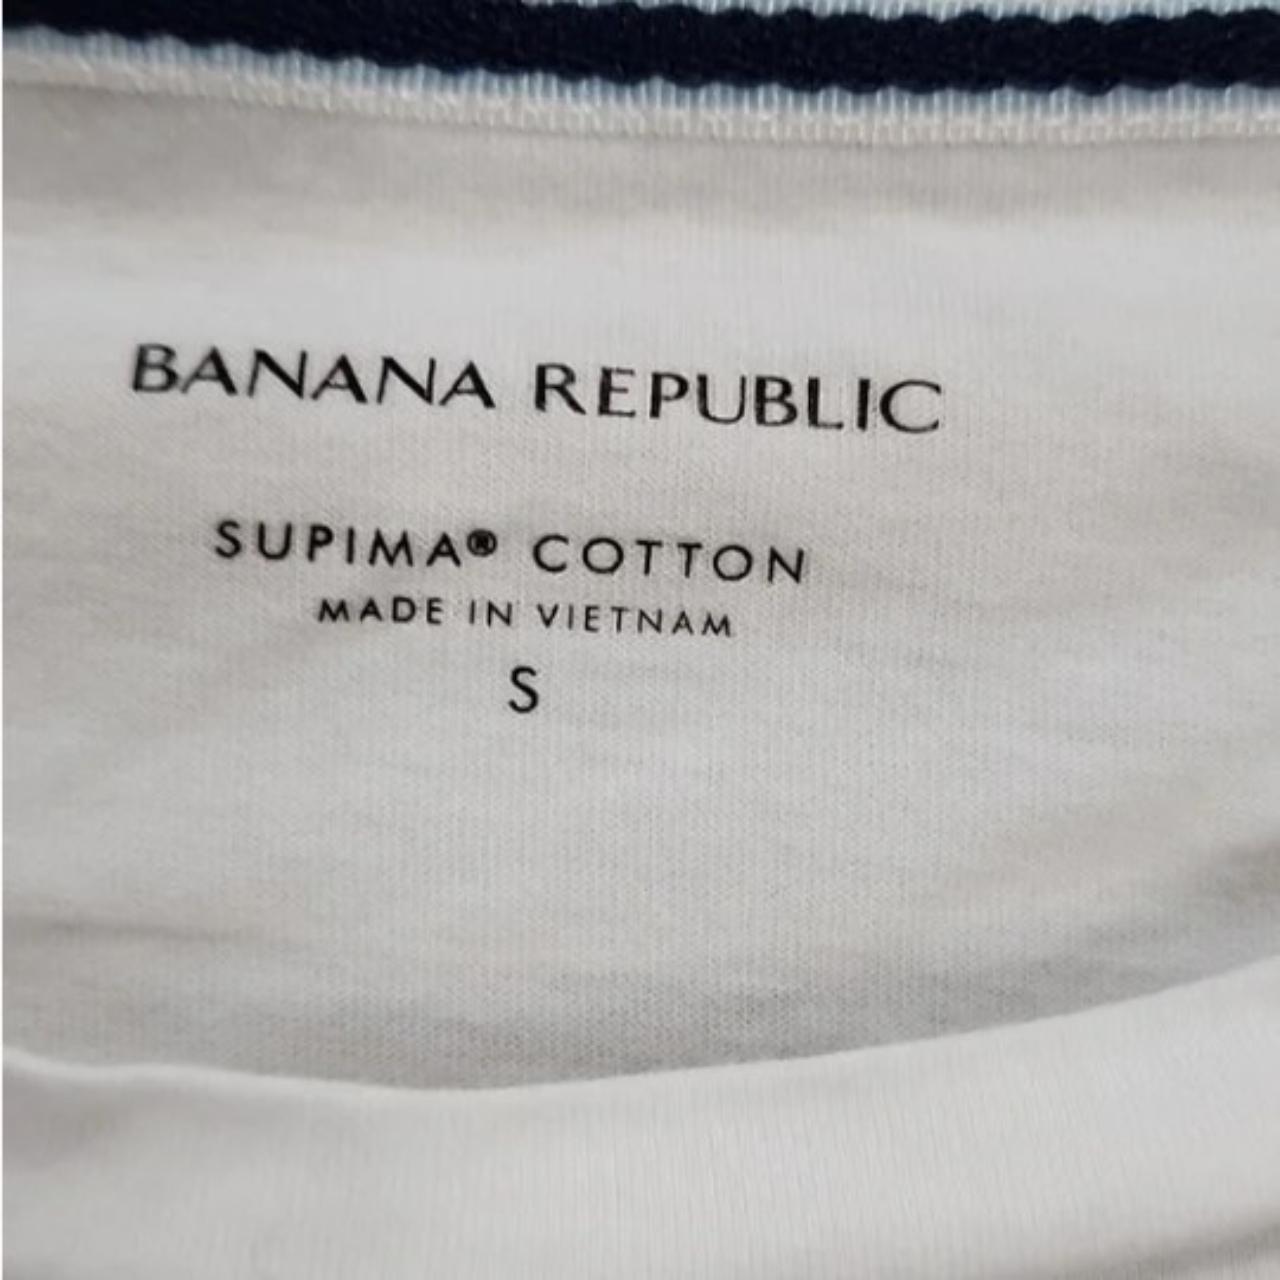 Banana Republic Supima Cotton Tee Color:... - Depop